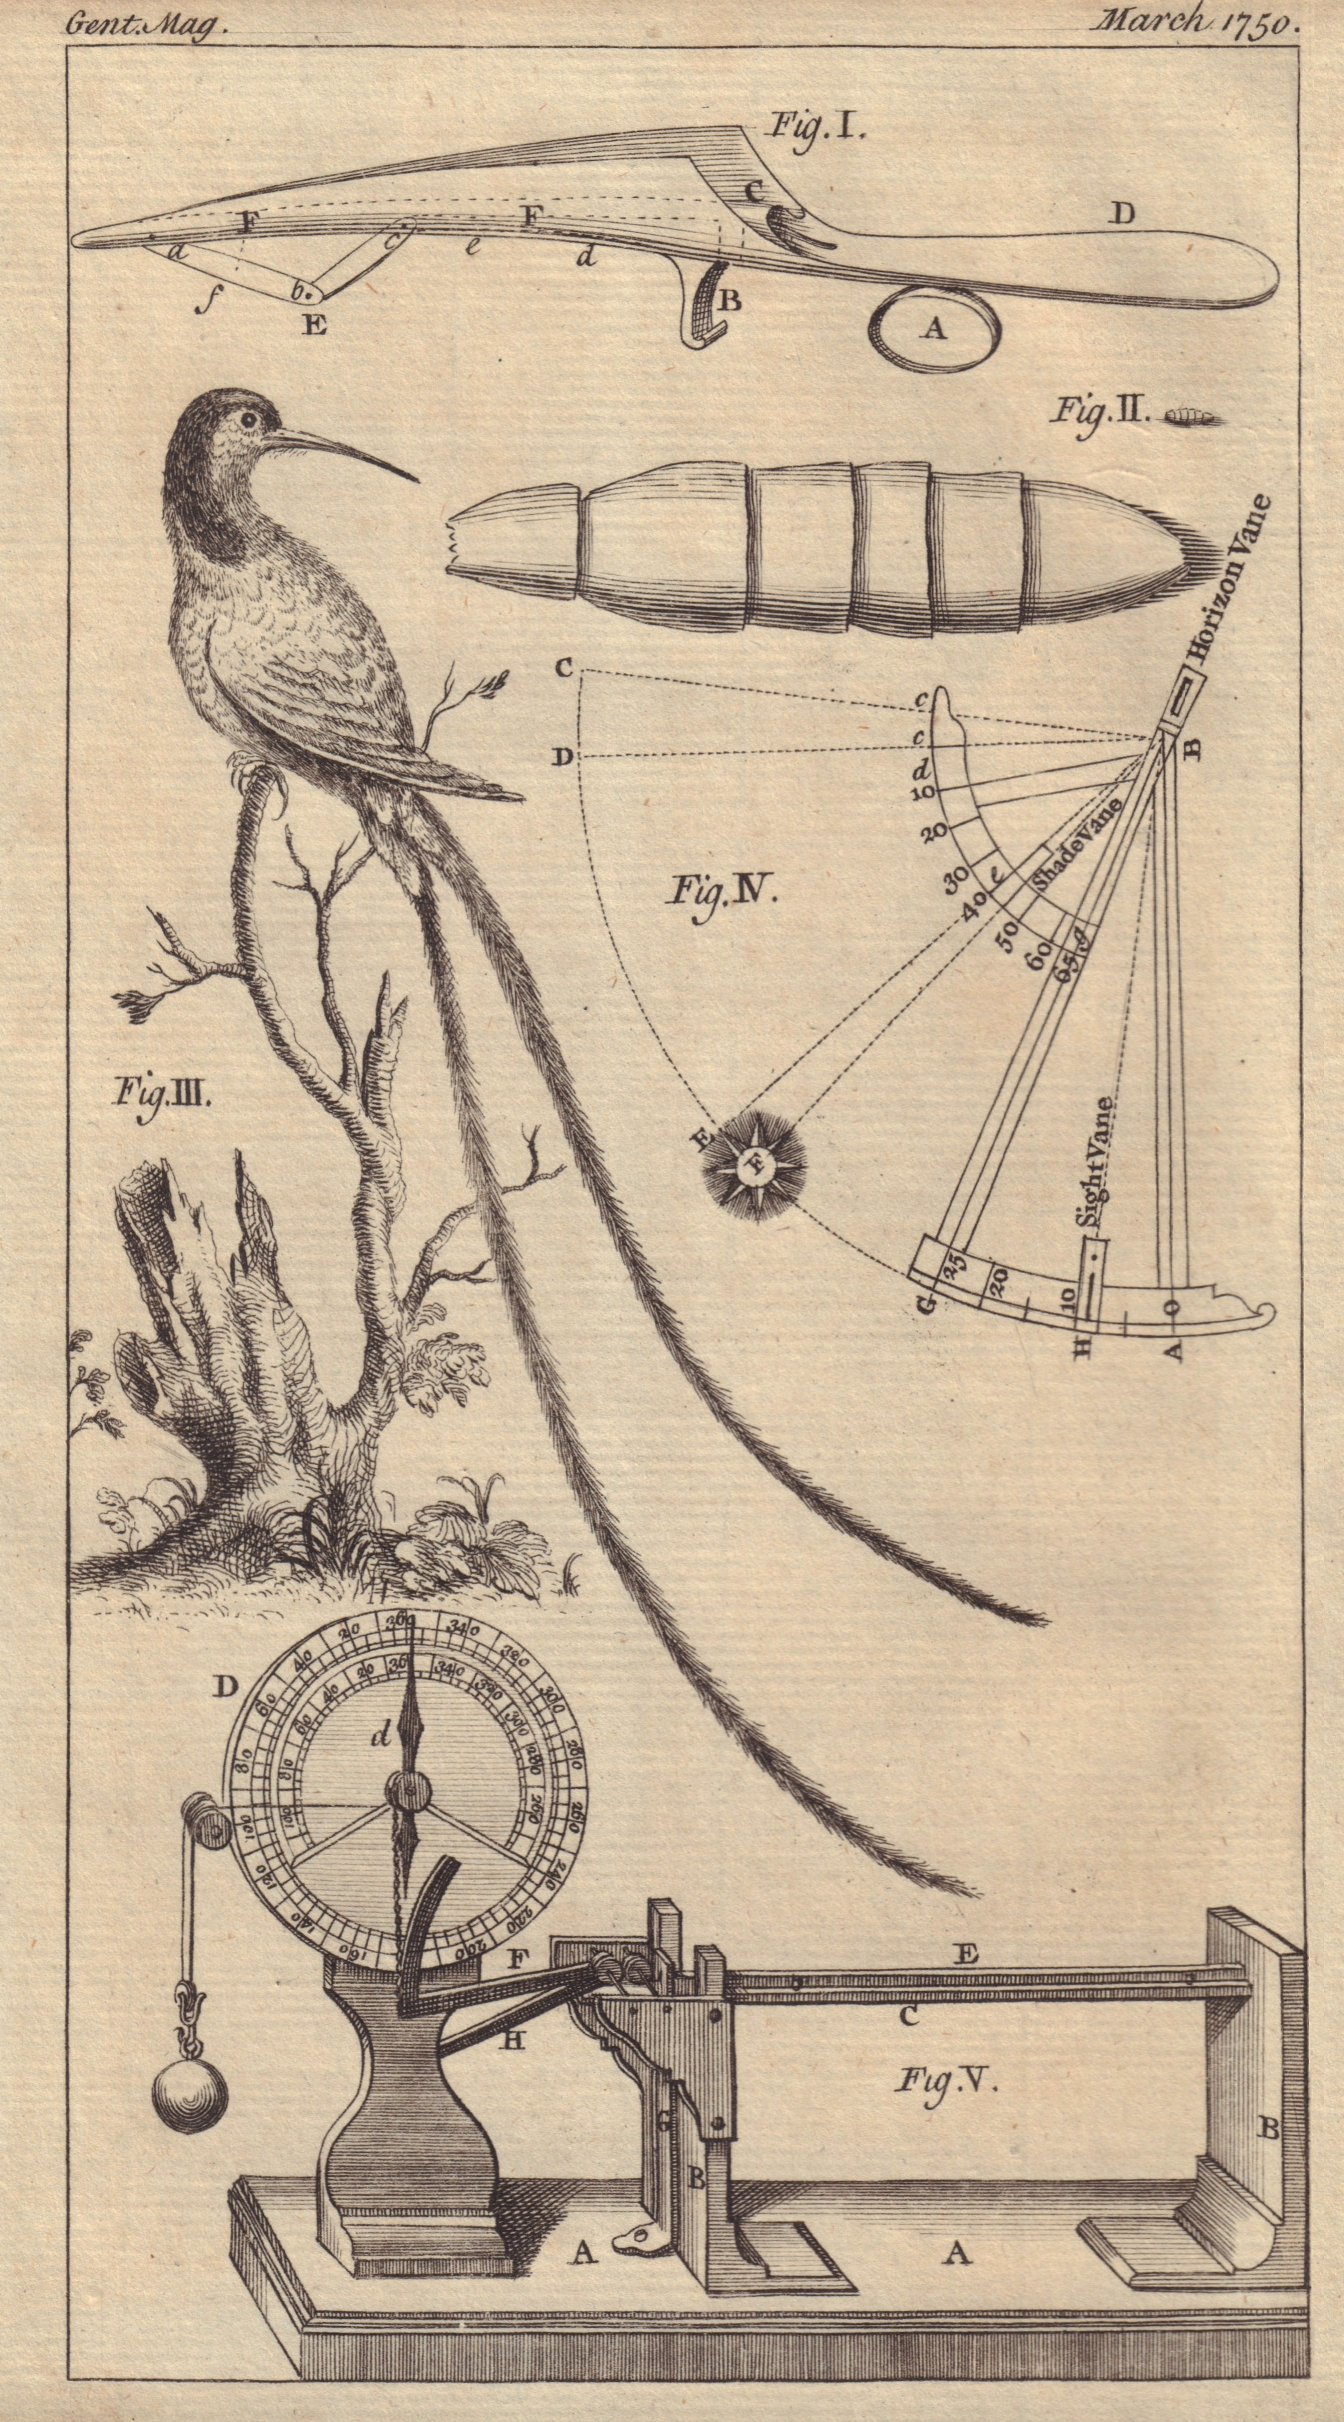 Gorget Surgical Instrument Davis's Quadrant Hummingbird Ellicot's Pyrometer 1750